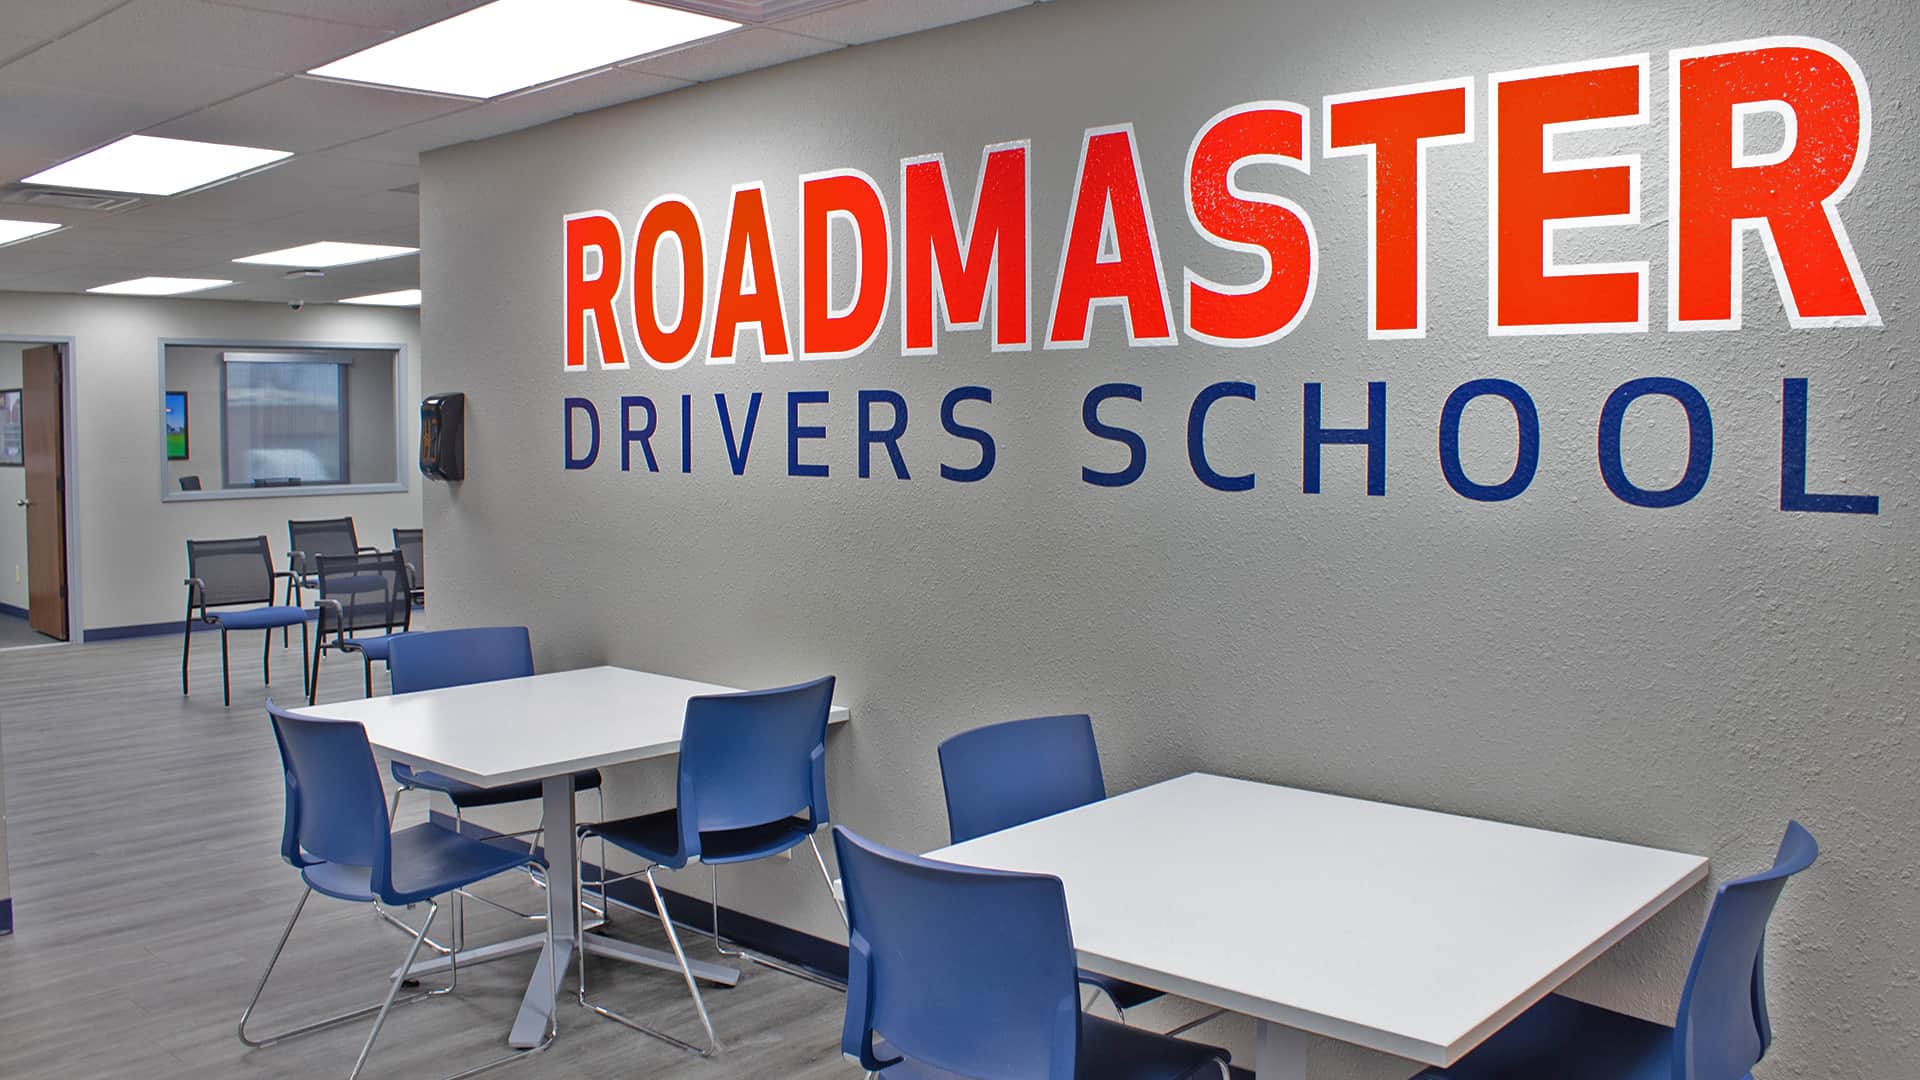 Roadmaster Drivers School of Oklahoma City, OK 9